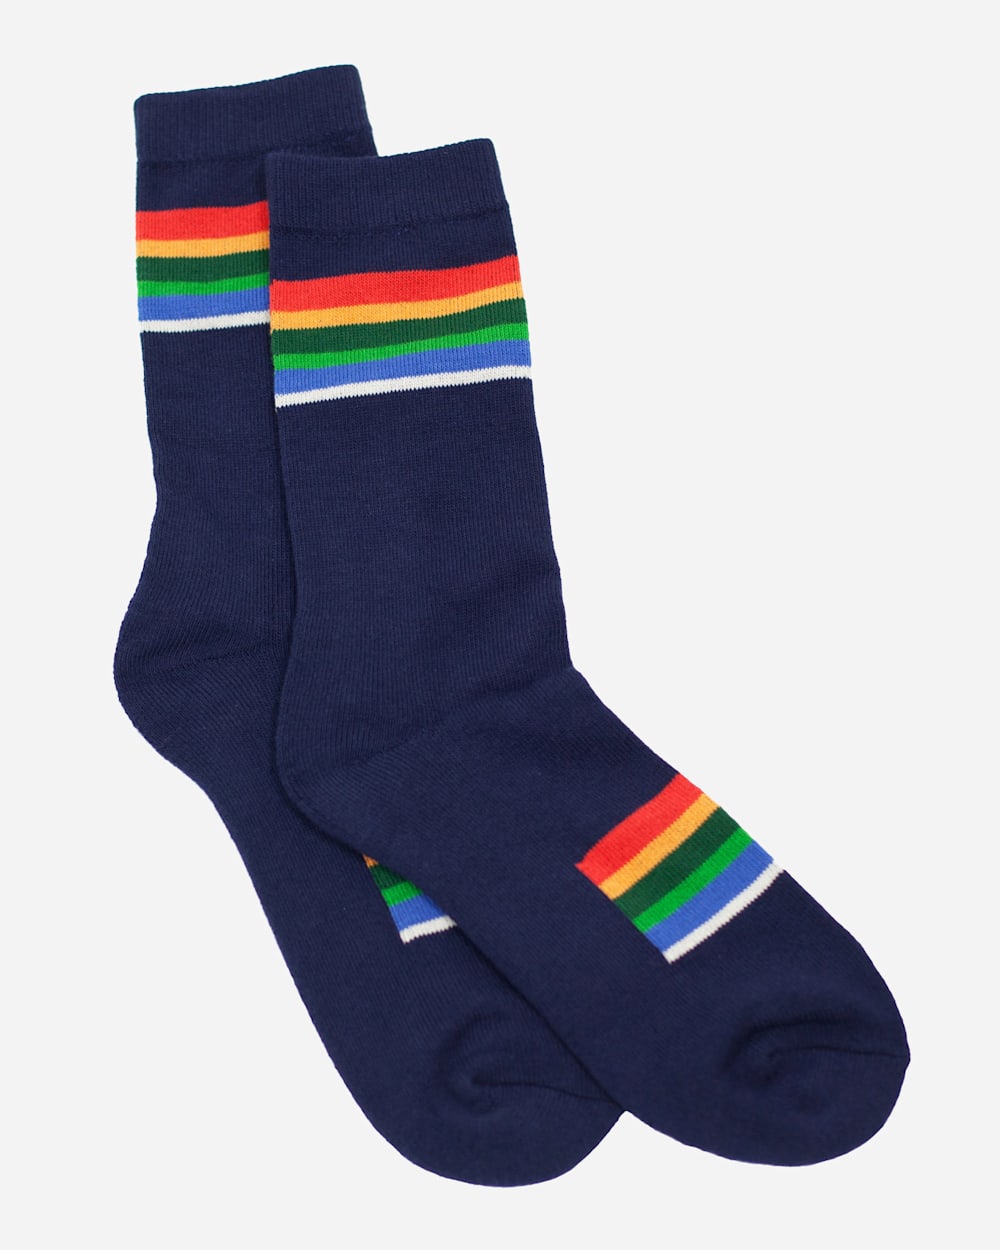 You sure you don't want the socks, friend? - Little Yoga Socks